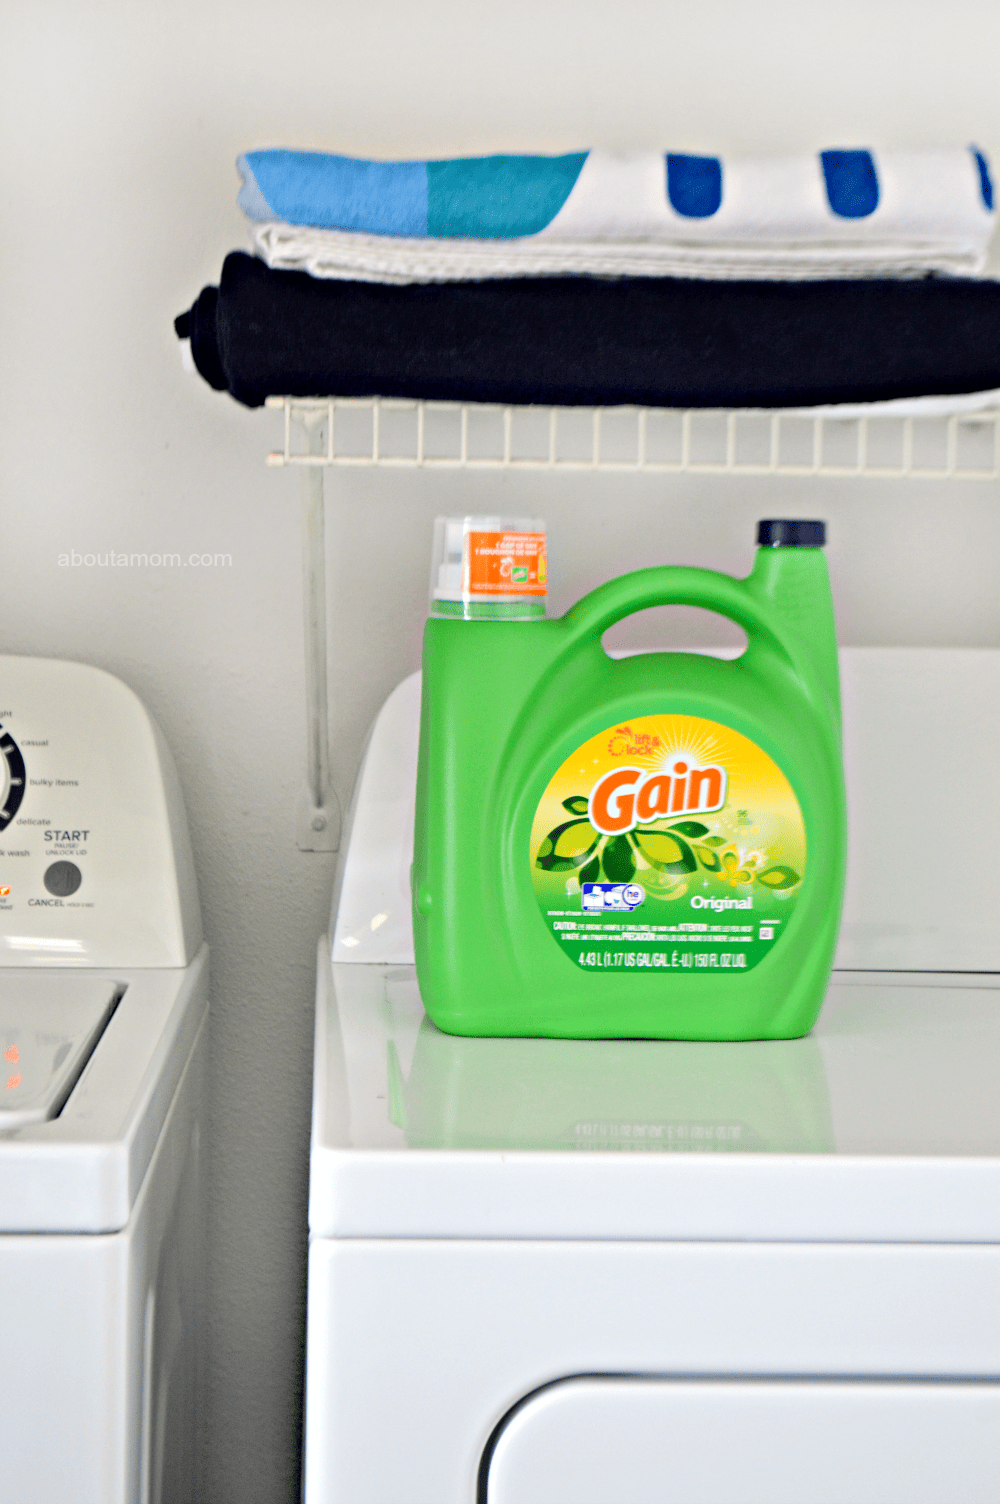 Gain Laundry Detergent